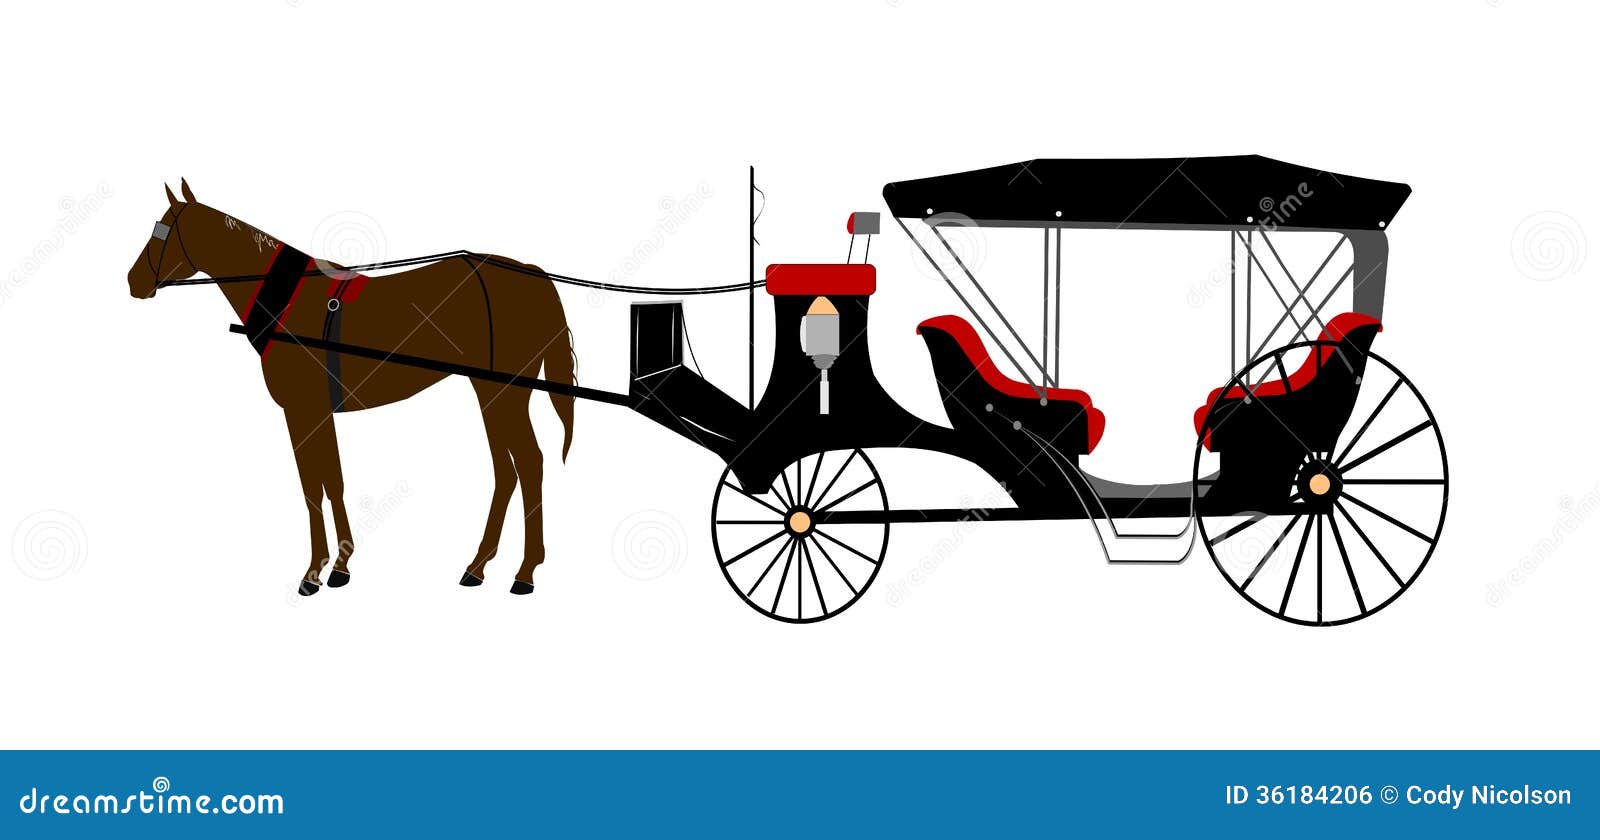 clipart horse drawn wagon - photo #8